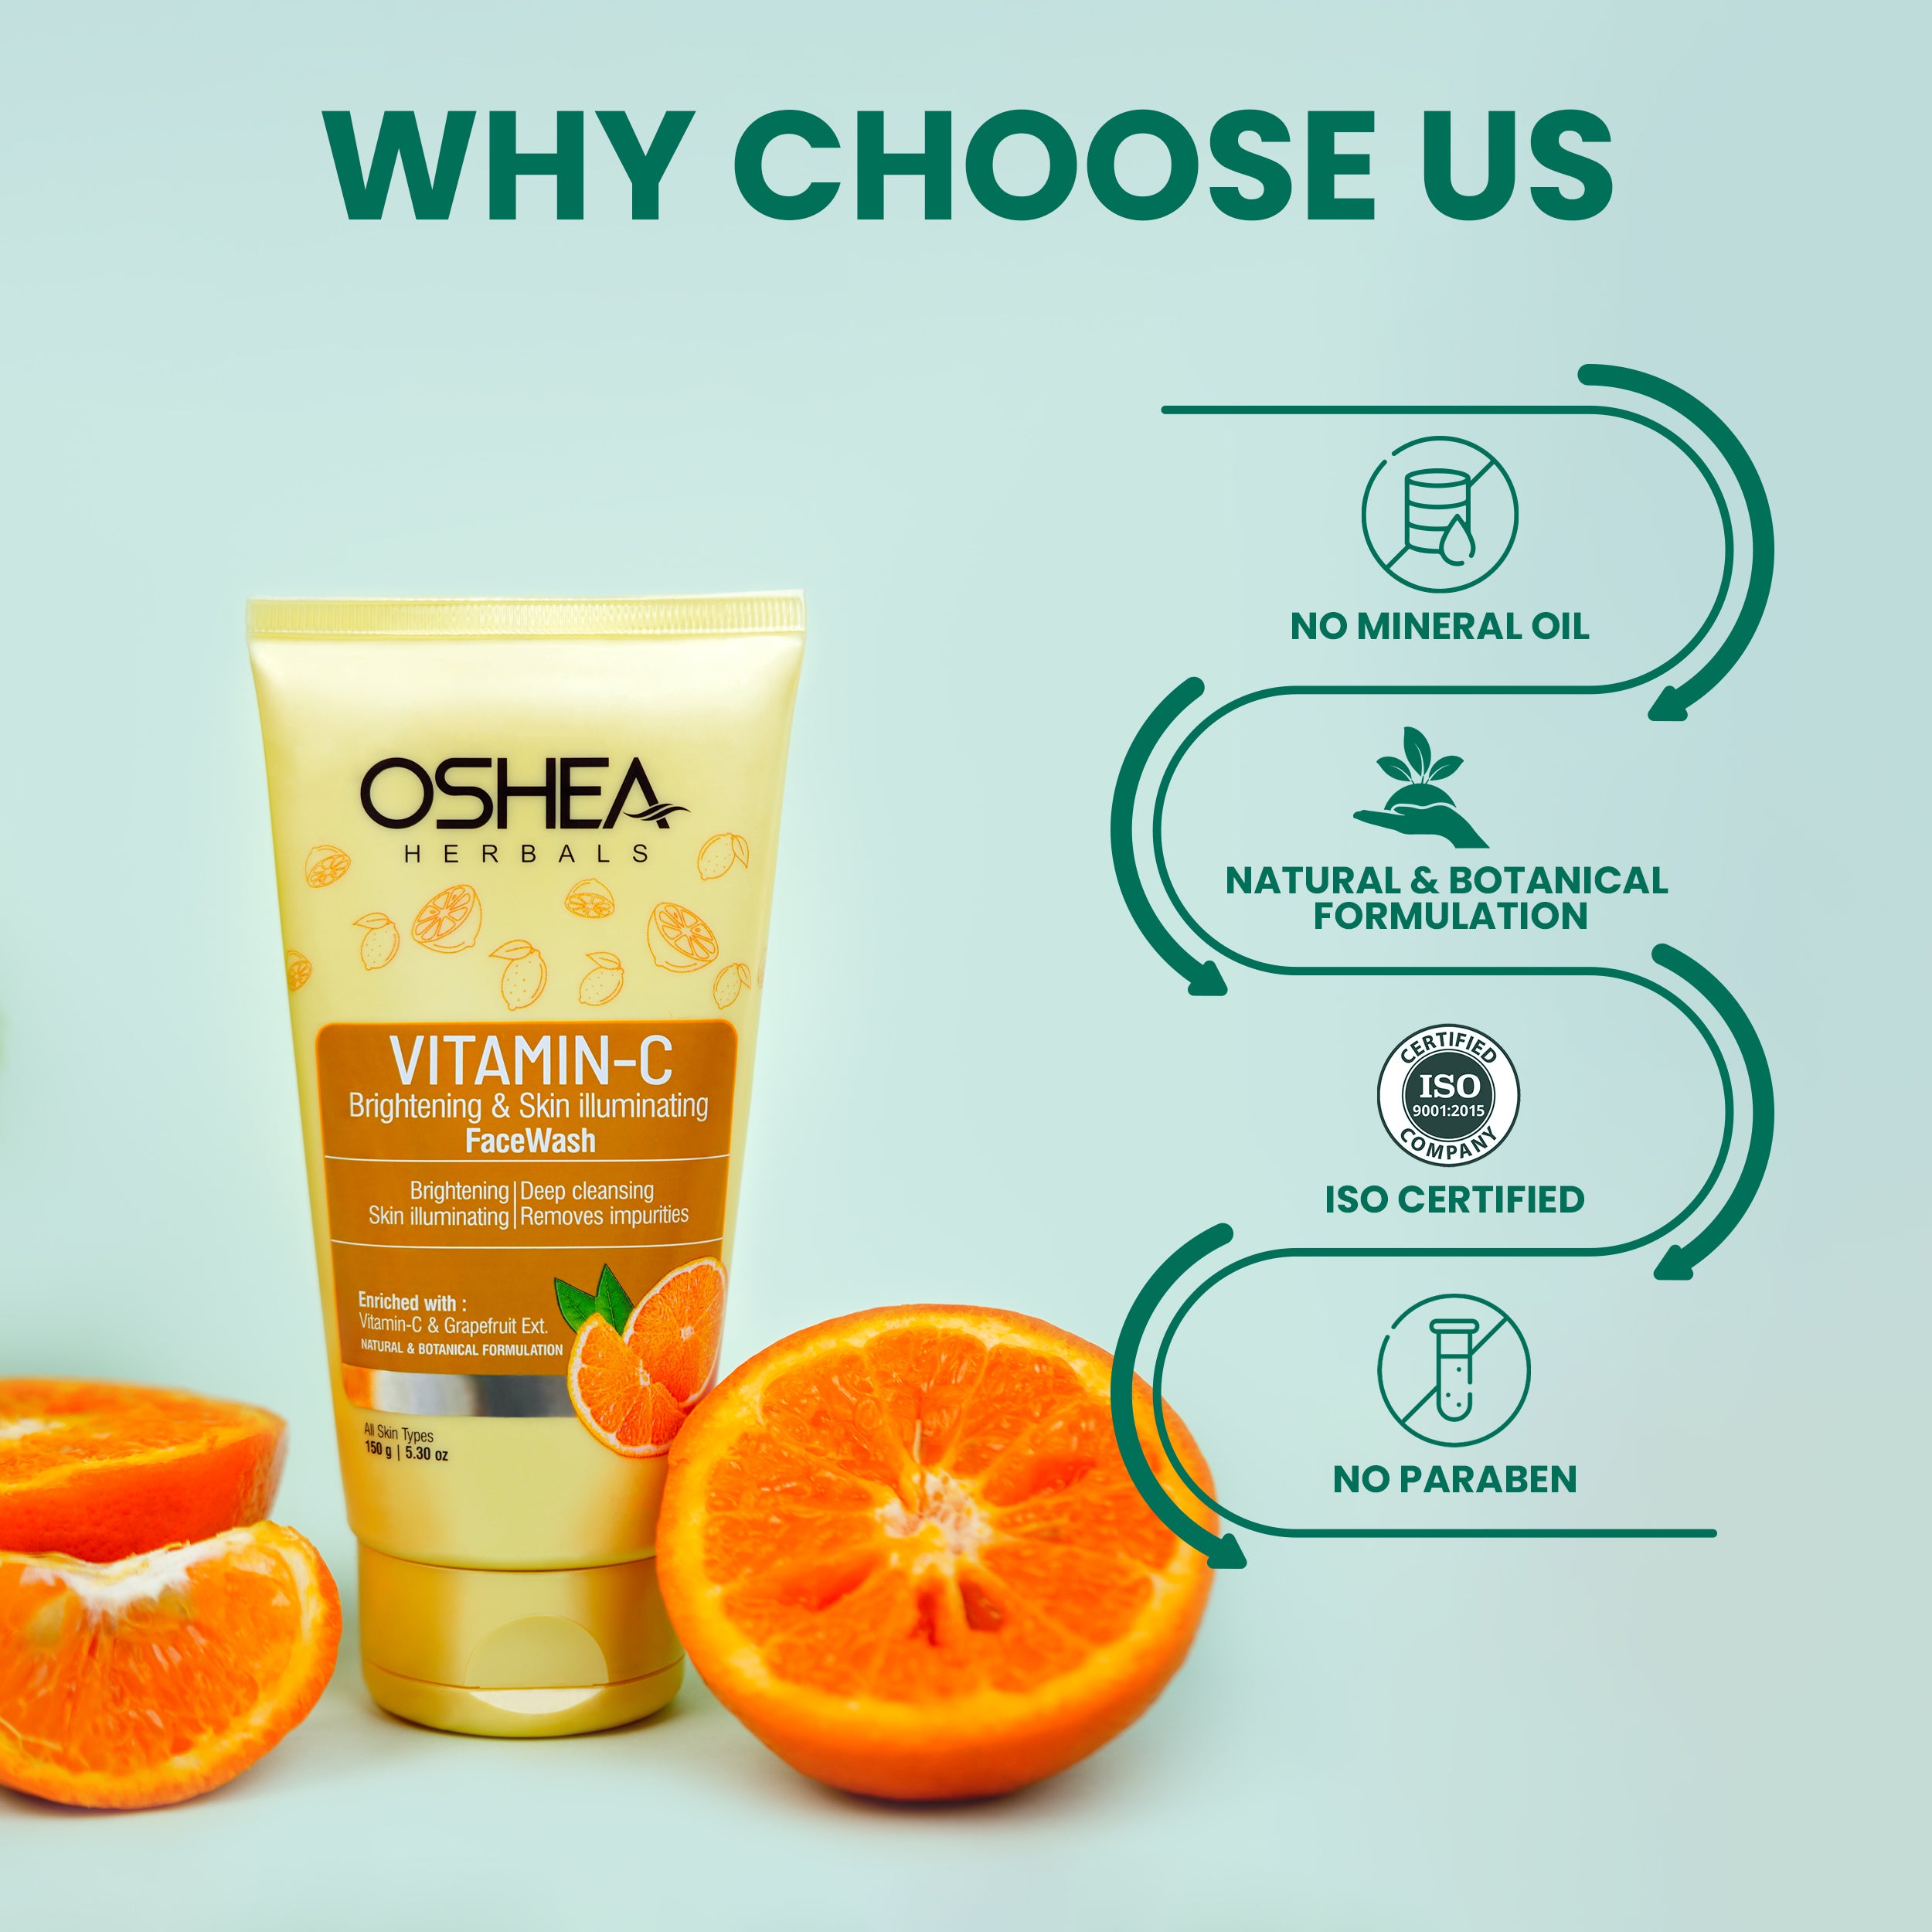 Why choose us Vitamin C Brightening_SkinIlluminating Face wash Oshea Herbals